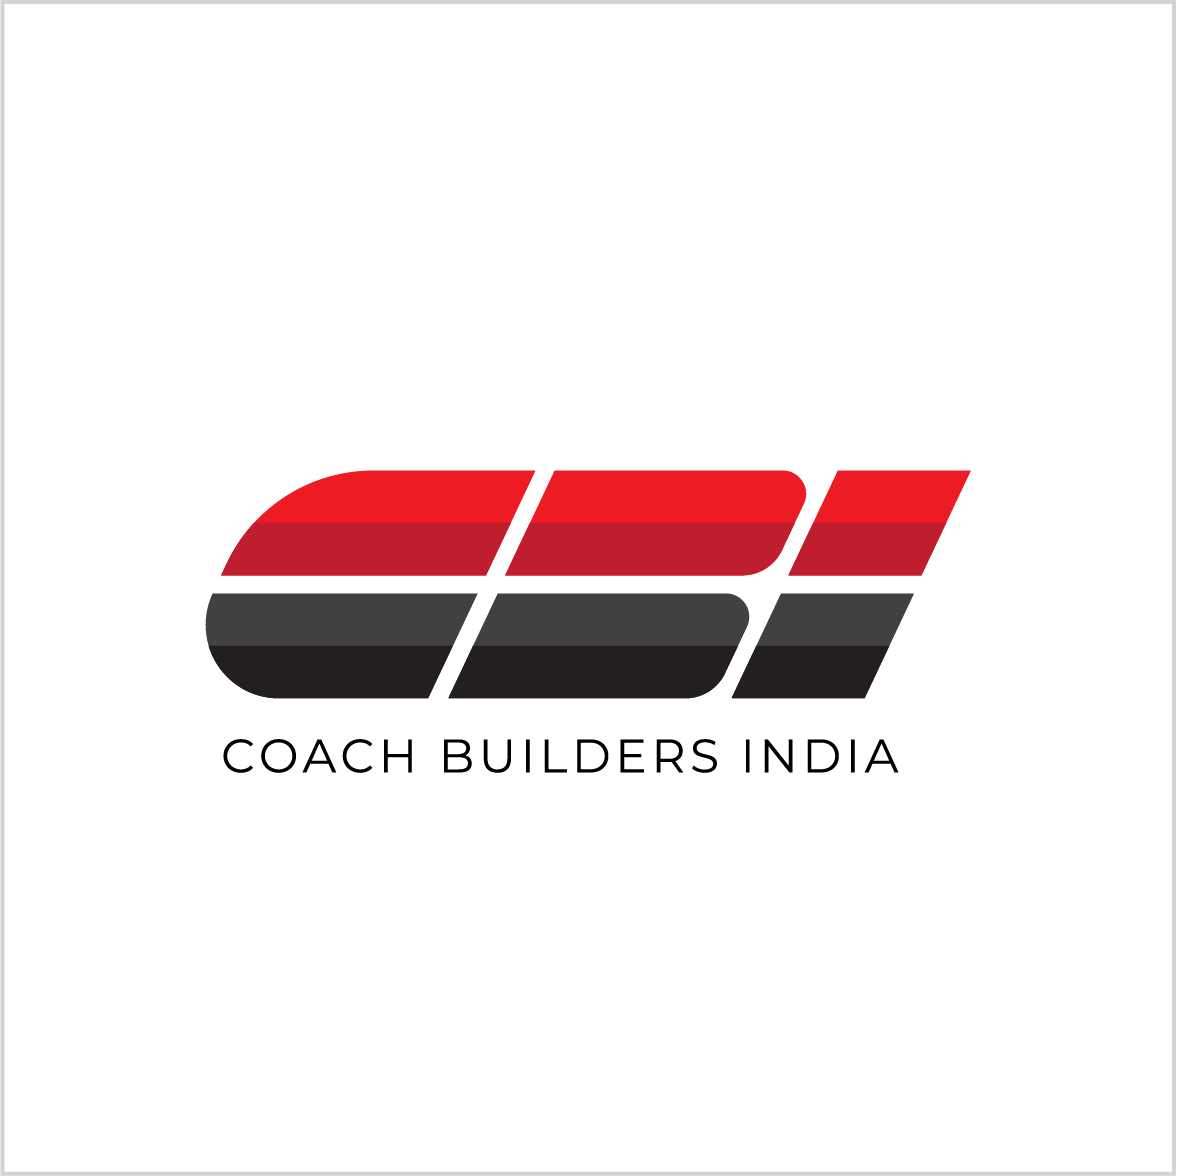 Coach-Builders-India Logo